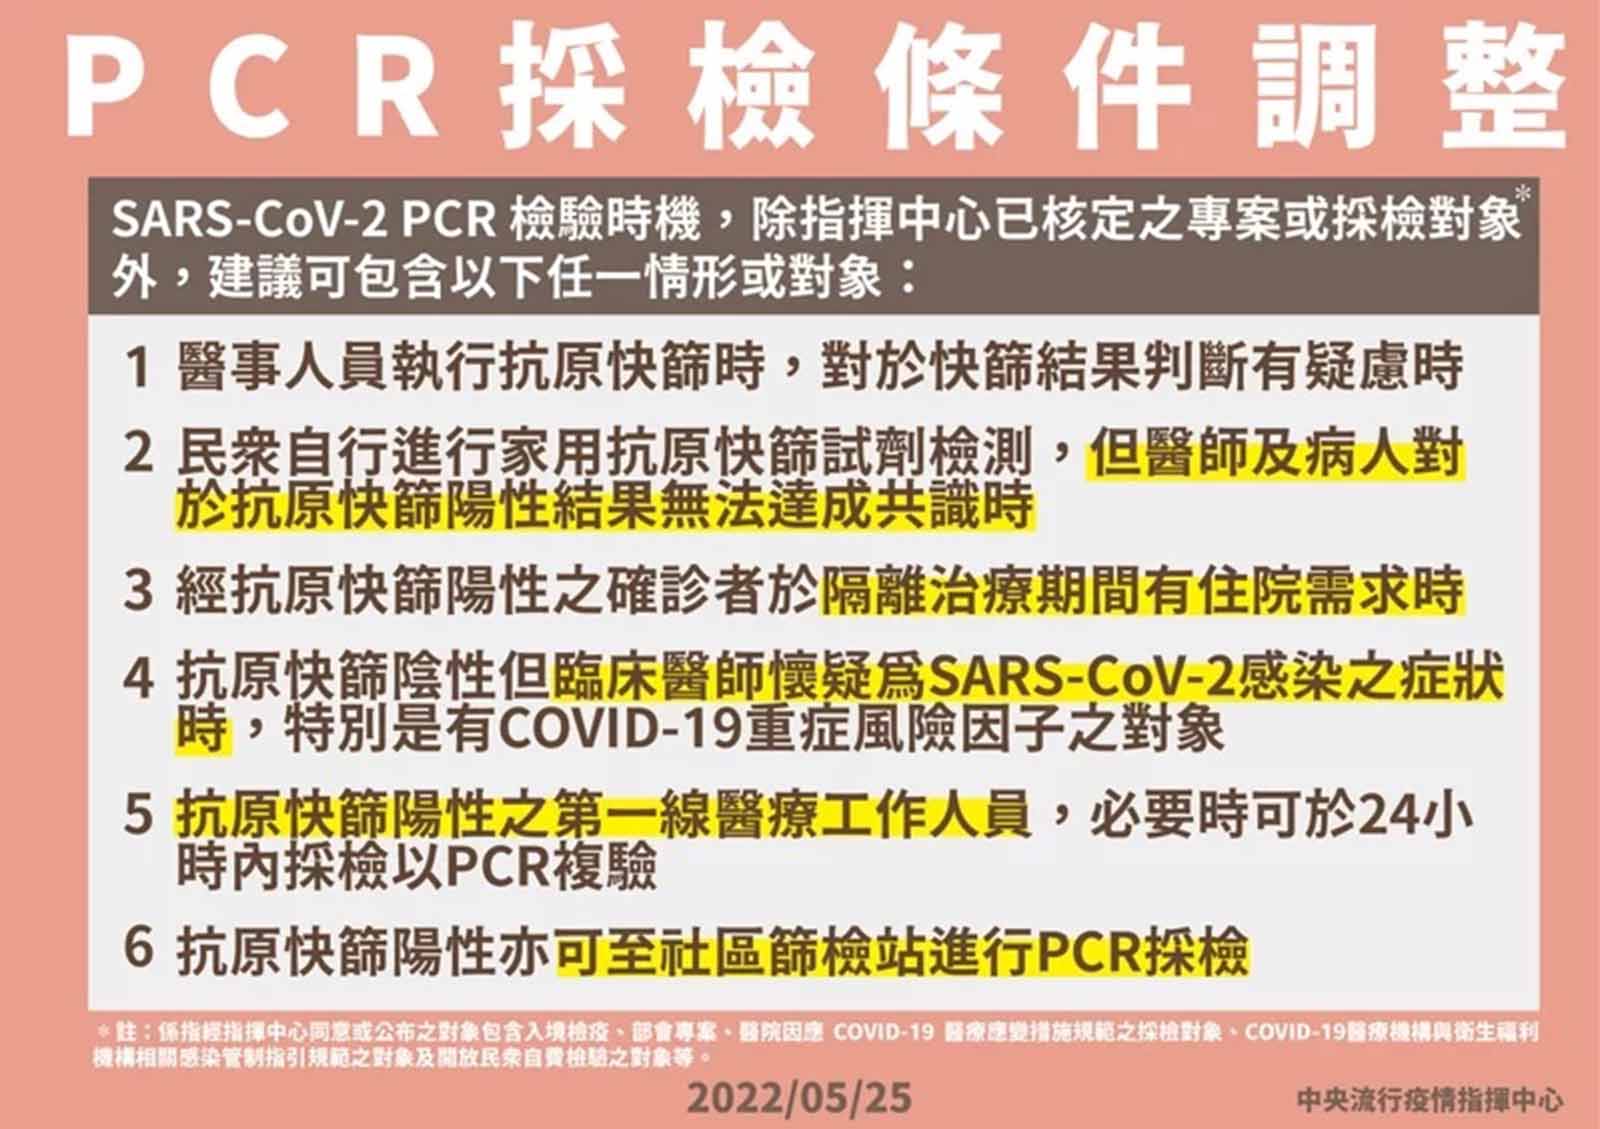 PCR-採檢-條件-快篩-陽性-確診-新冠肺炎-Covid-19-政策